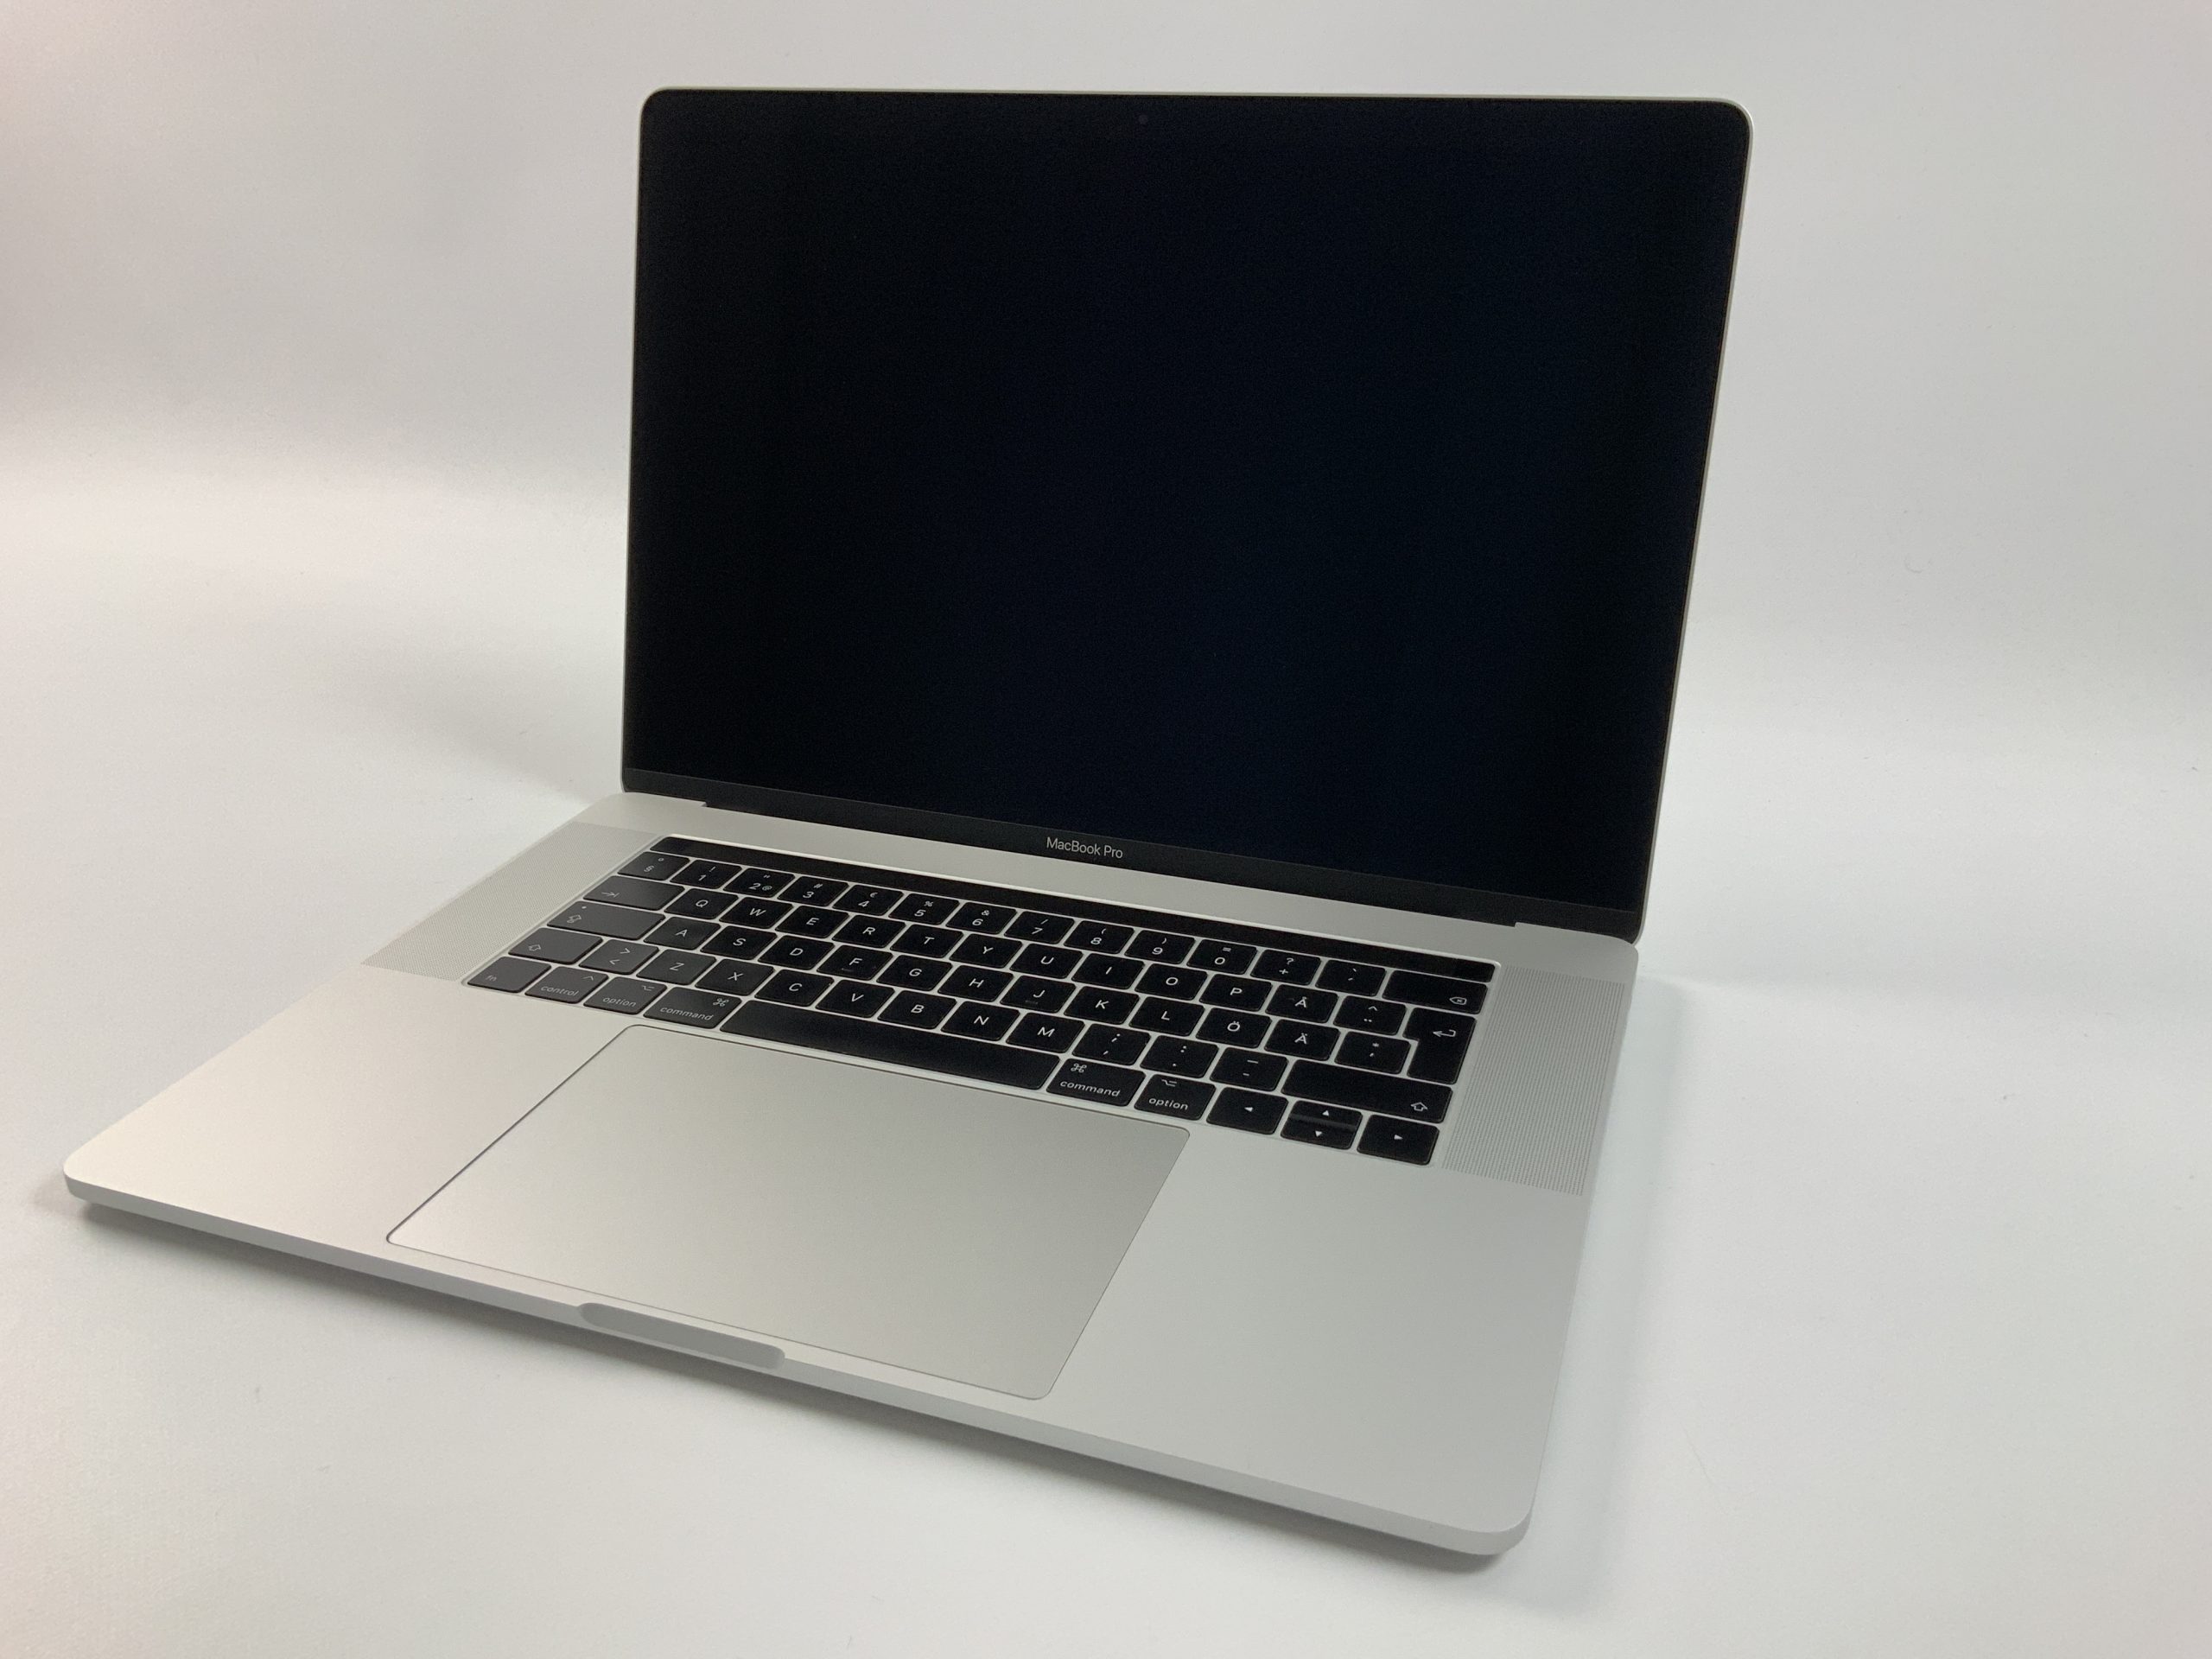 MacBook Pro 15" Touch Bar Mid 2017 (Intel Quad-Core i7 2.9 GHz 16 GB RAM 512 GB SSD), Silver, Intel Quad-Core i7 2.9 GHz, 16 GB RAM, 512 GB SSD, image 1